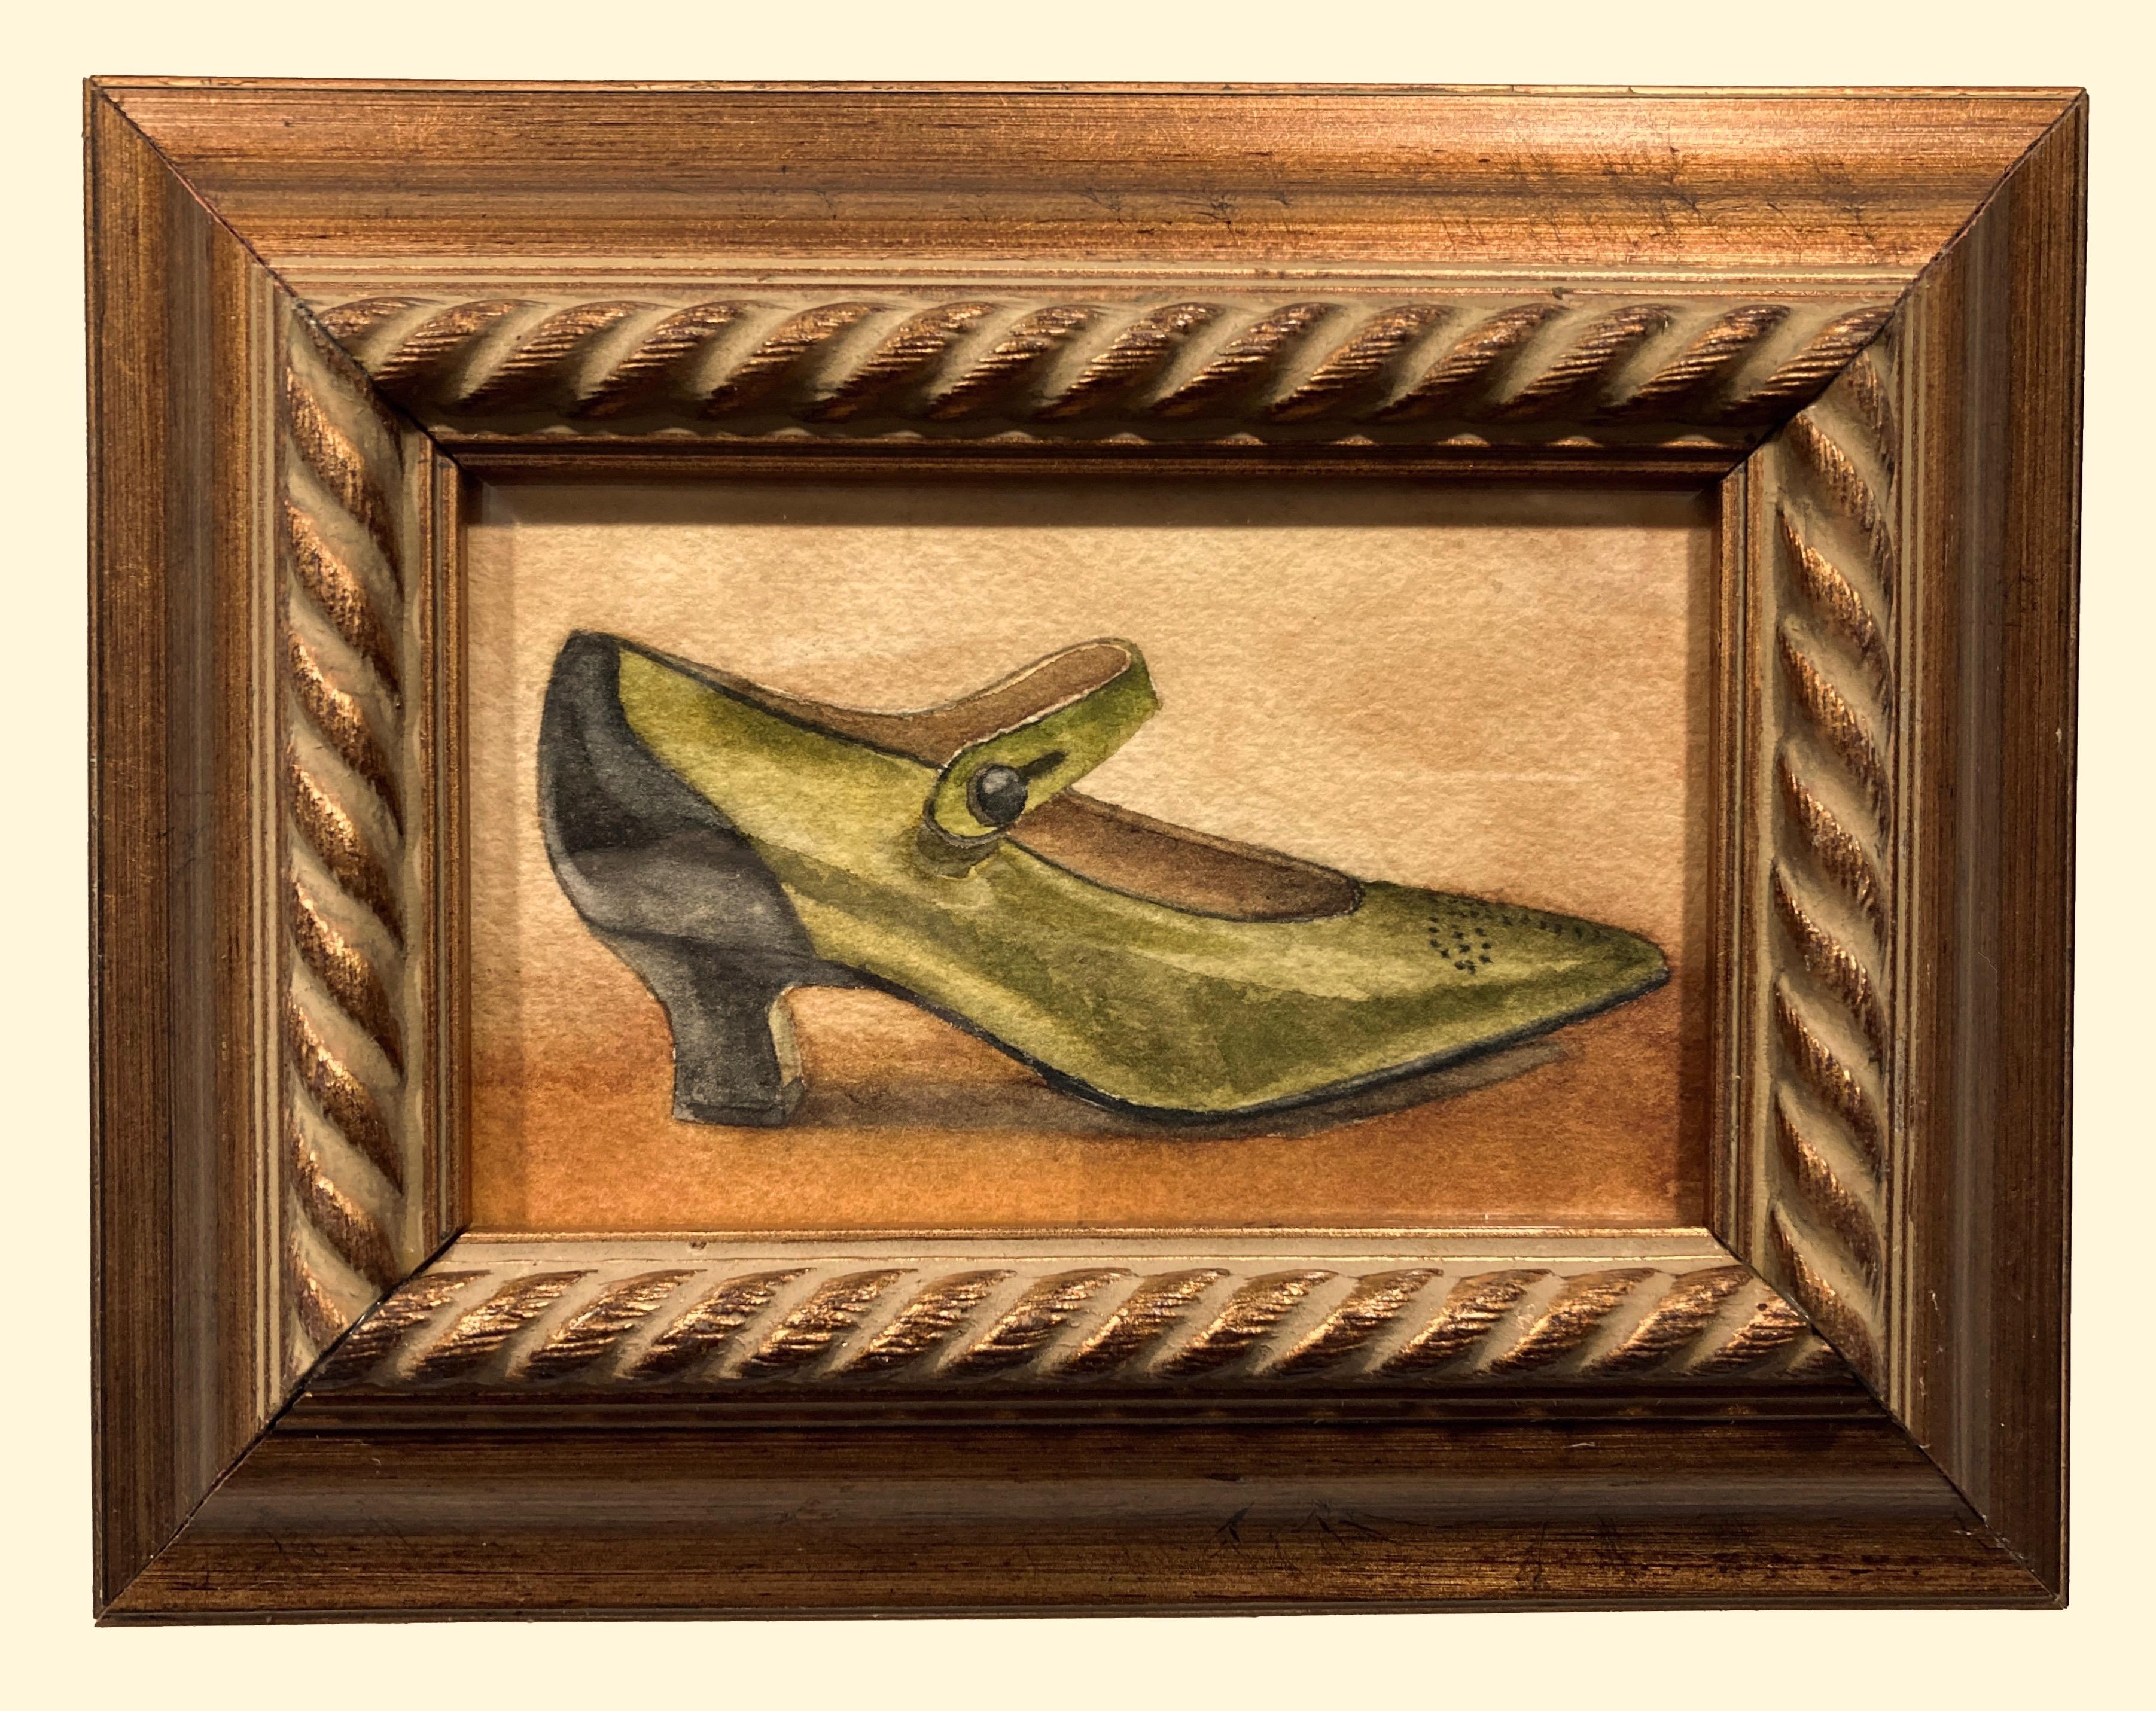 #Shoe, framed